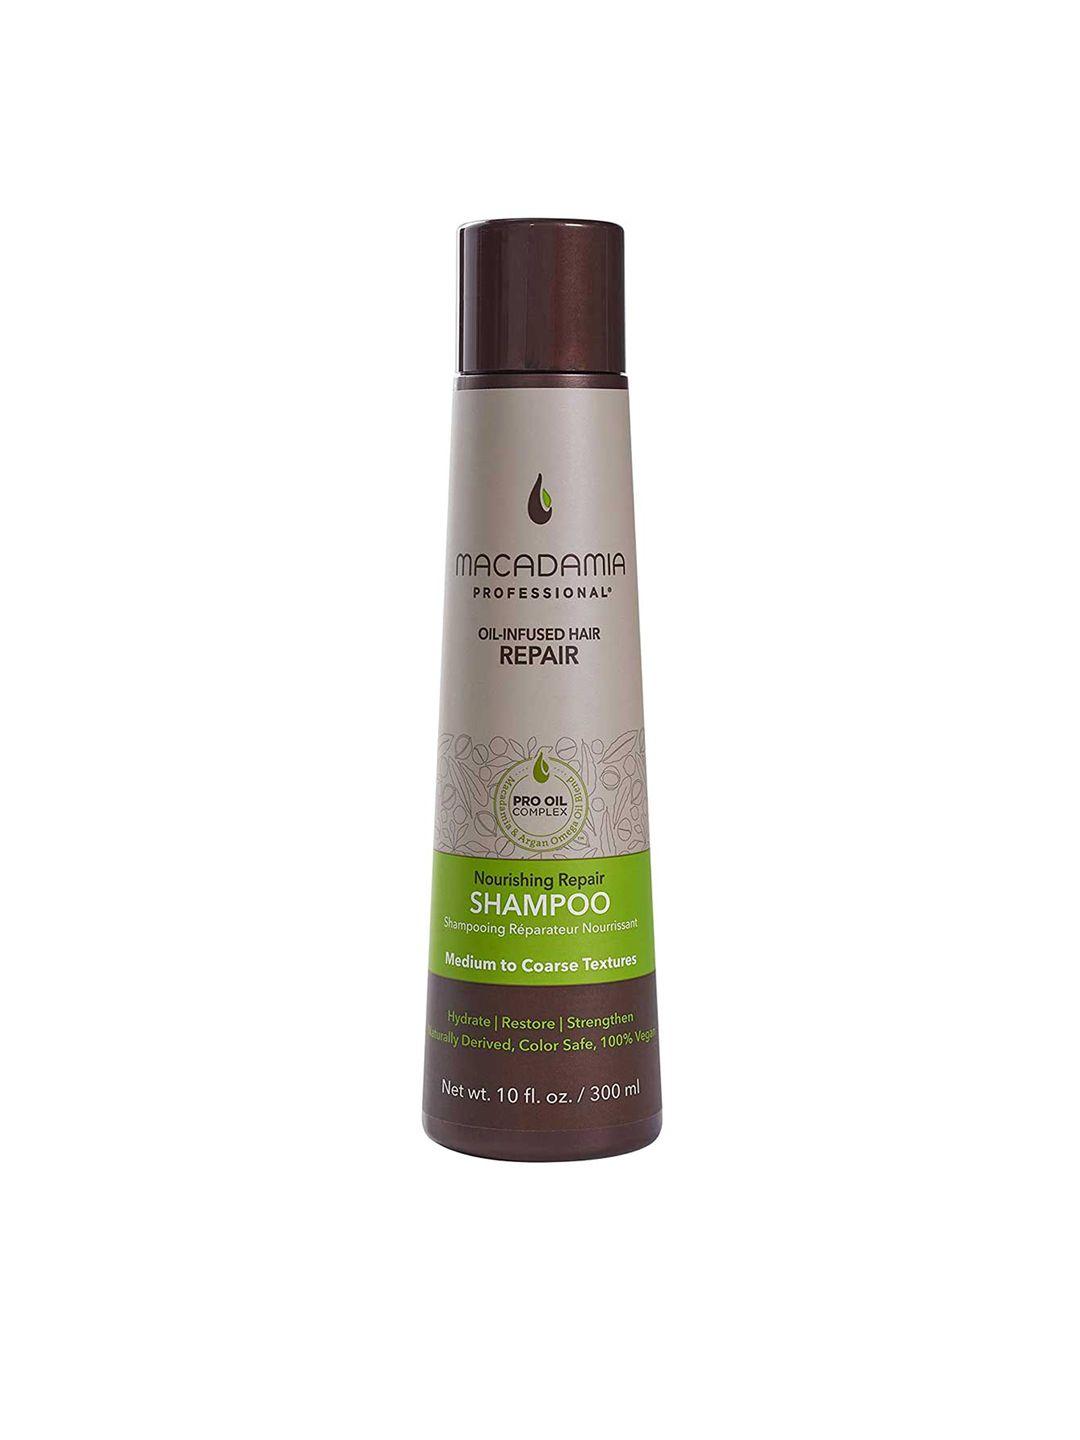 macadamia professional nourishing repair shampoo - 300ml